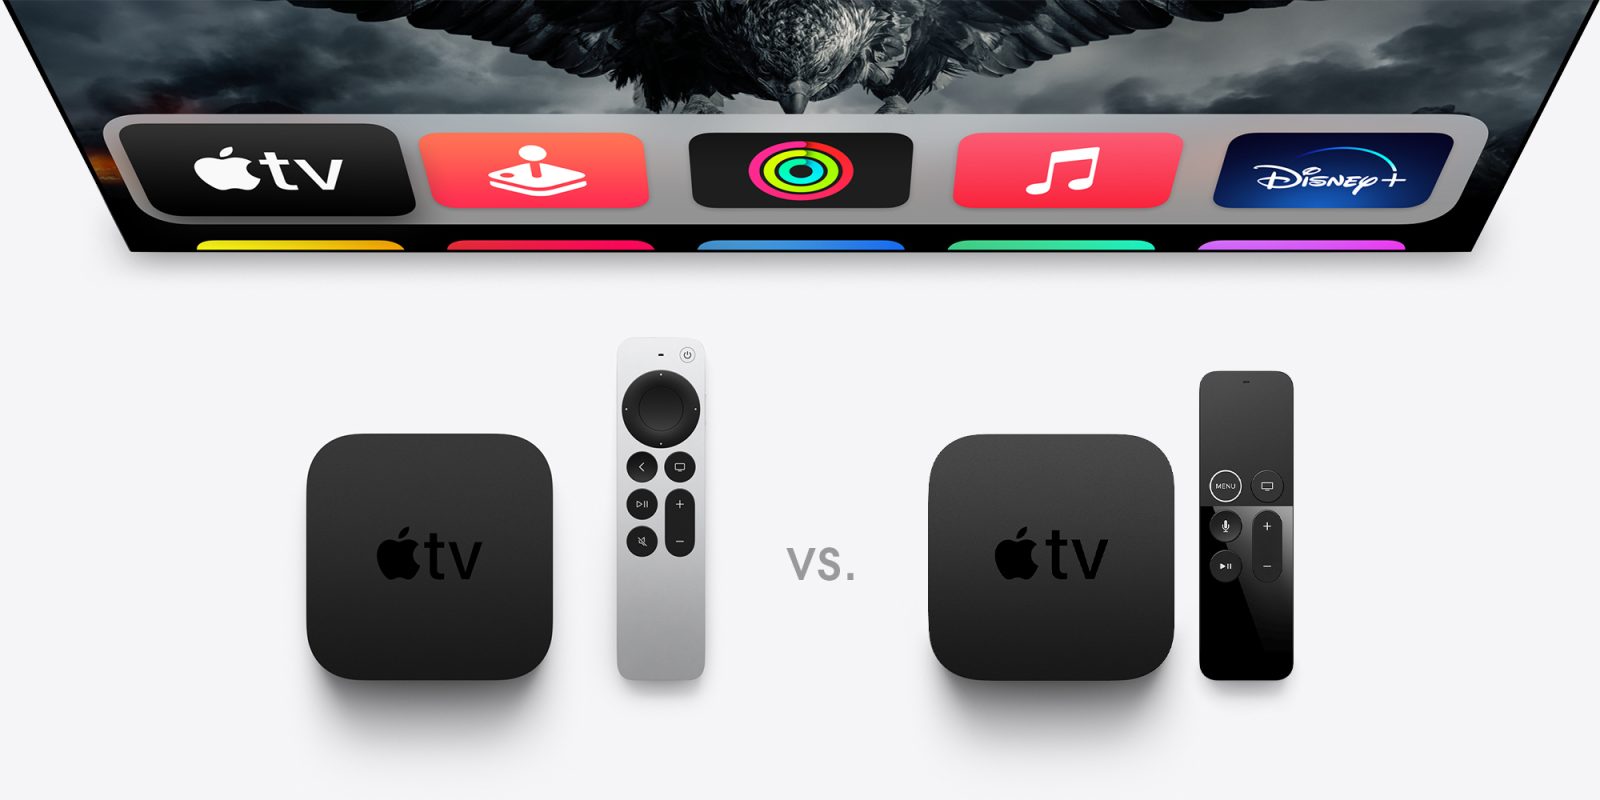 New Apple TV 4K vs Apple TV features, - 9to5Mac